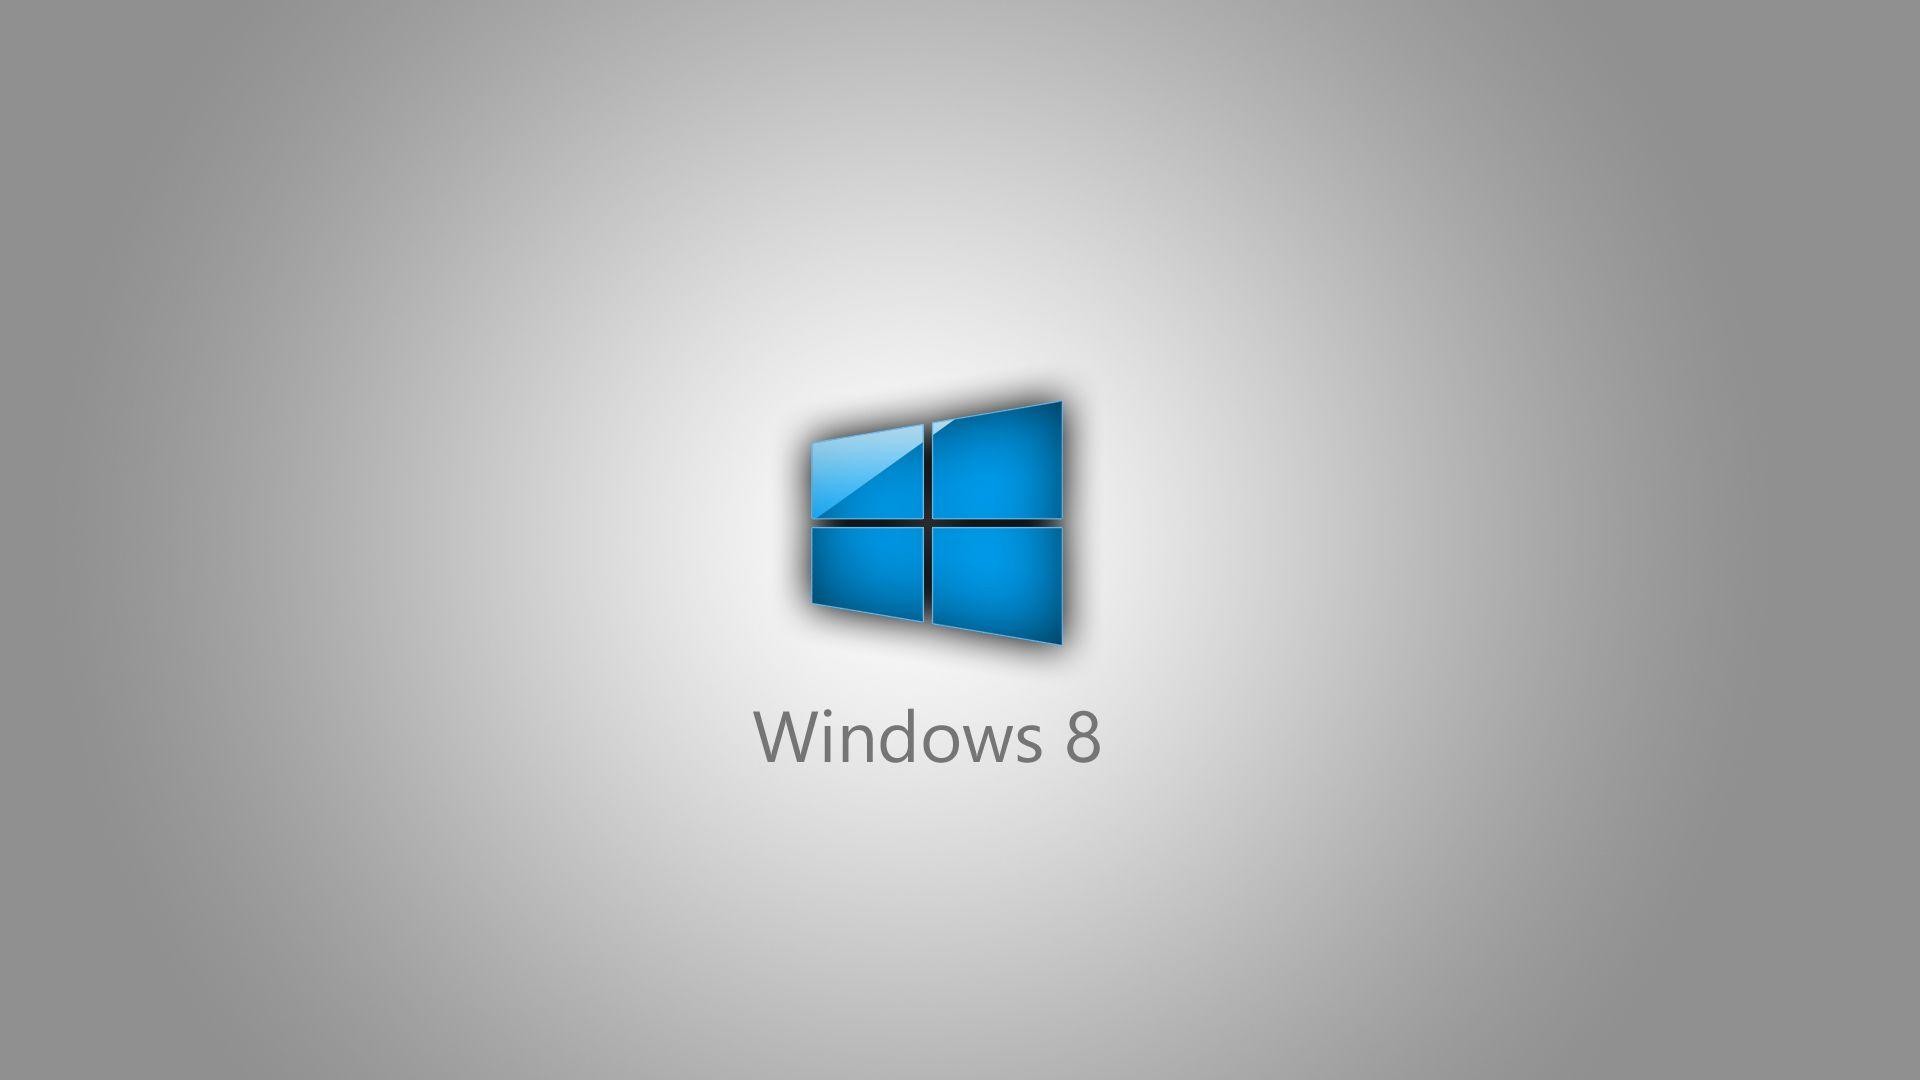 Windows 8.1 Wallpapers